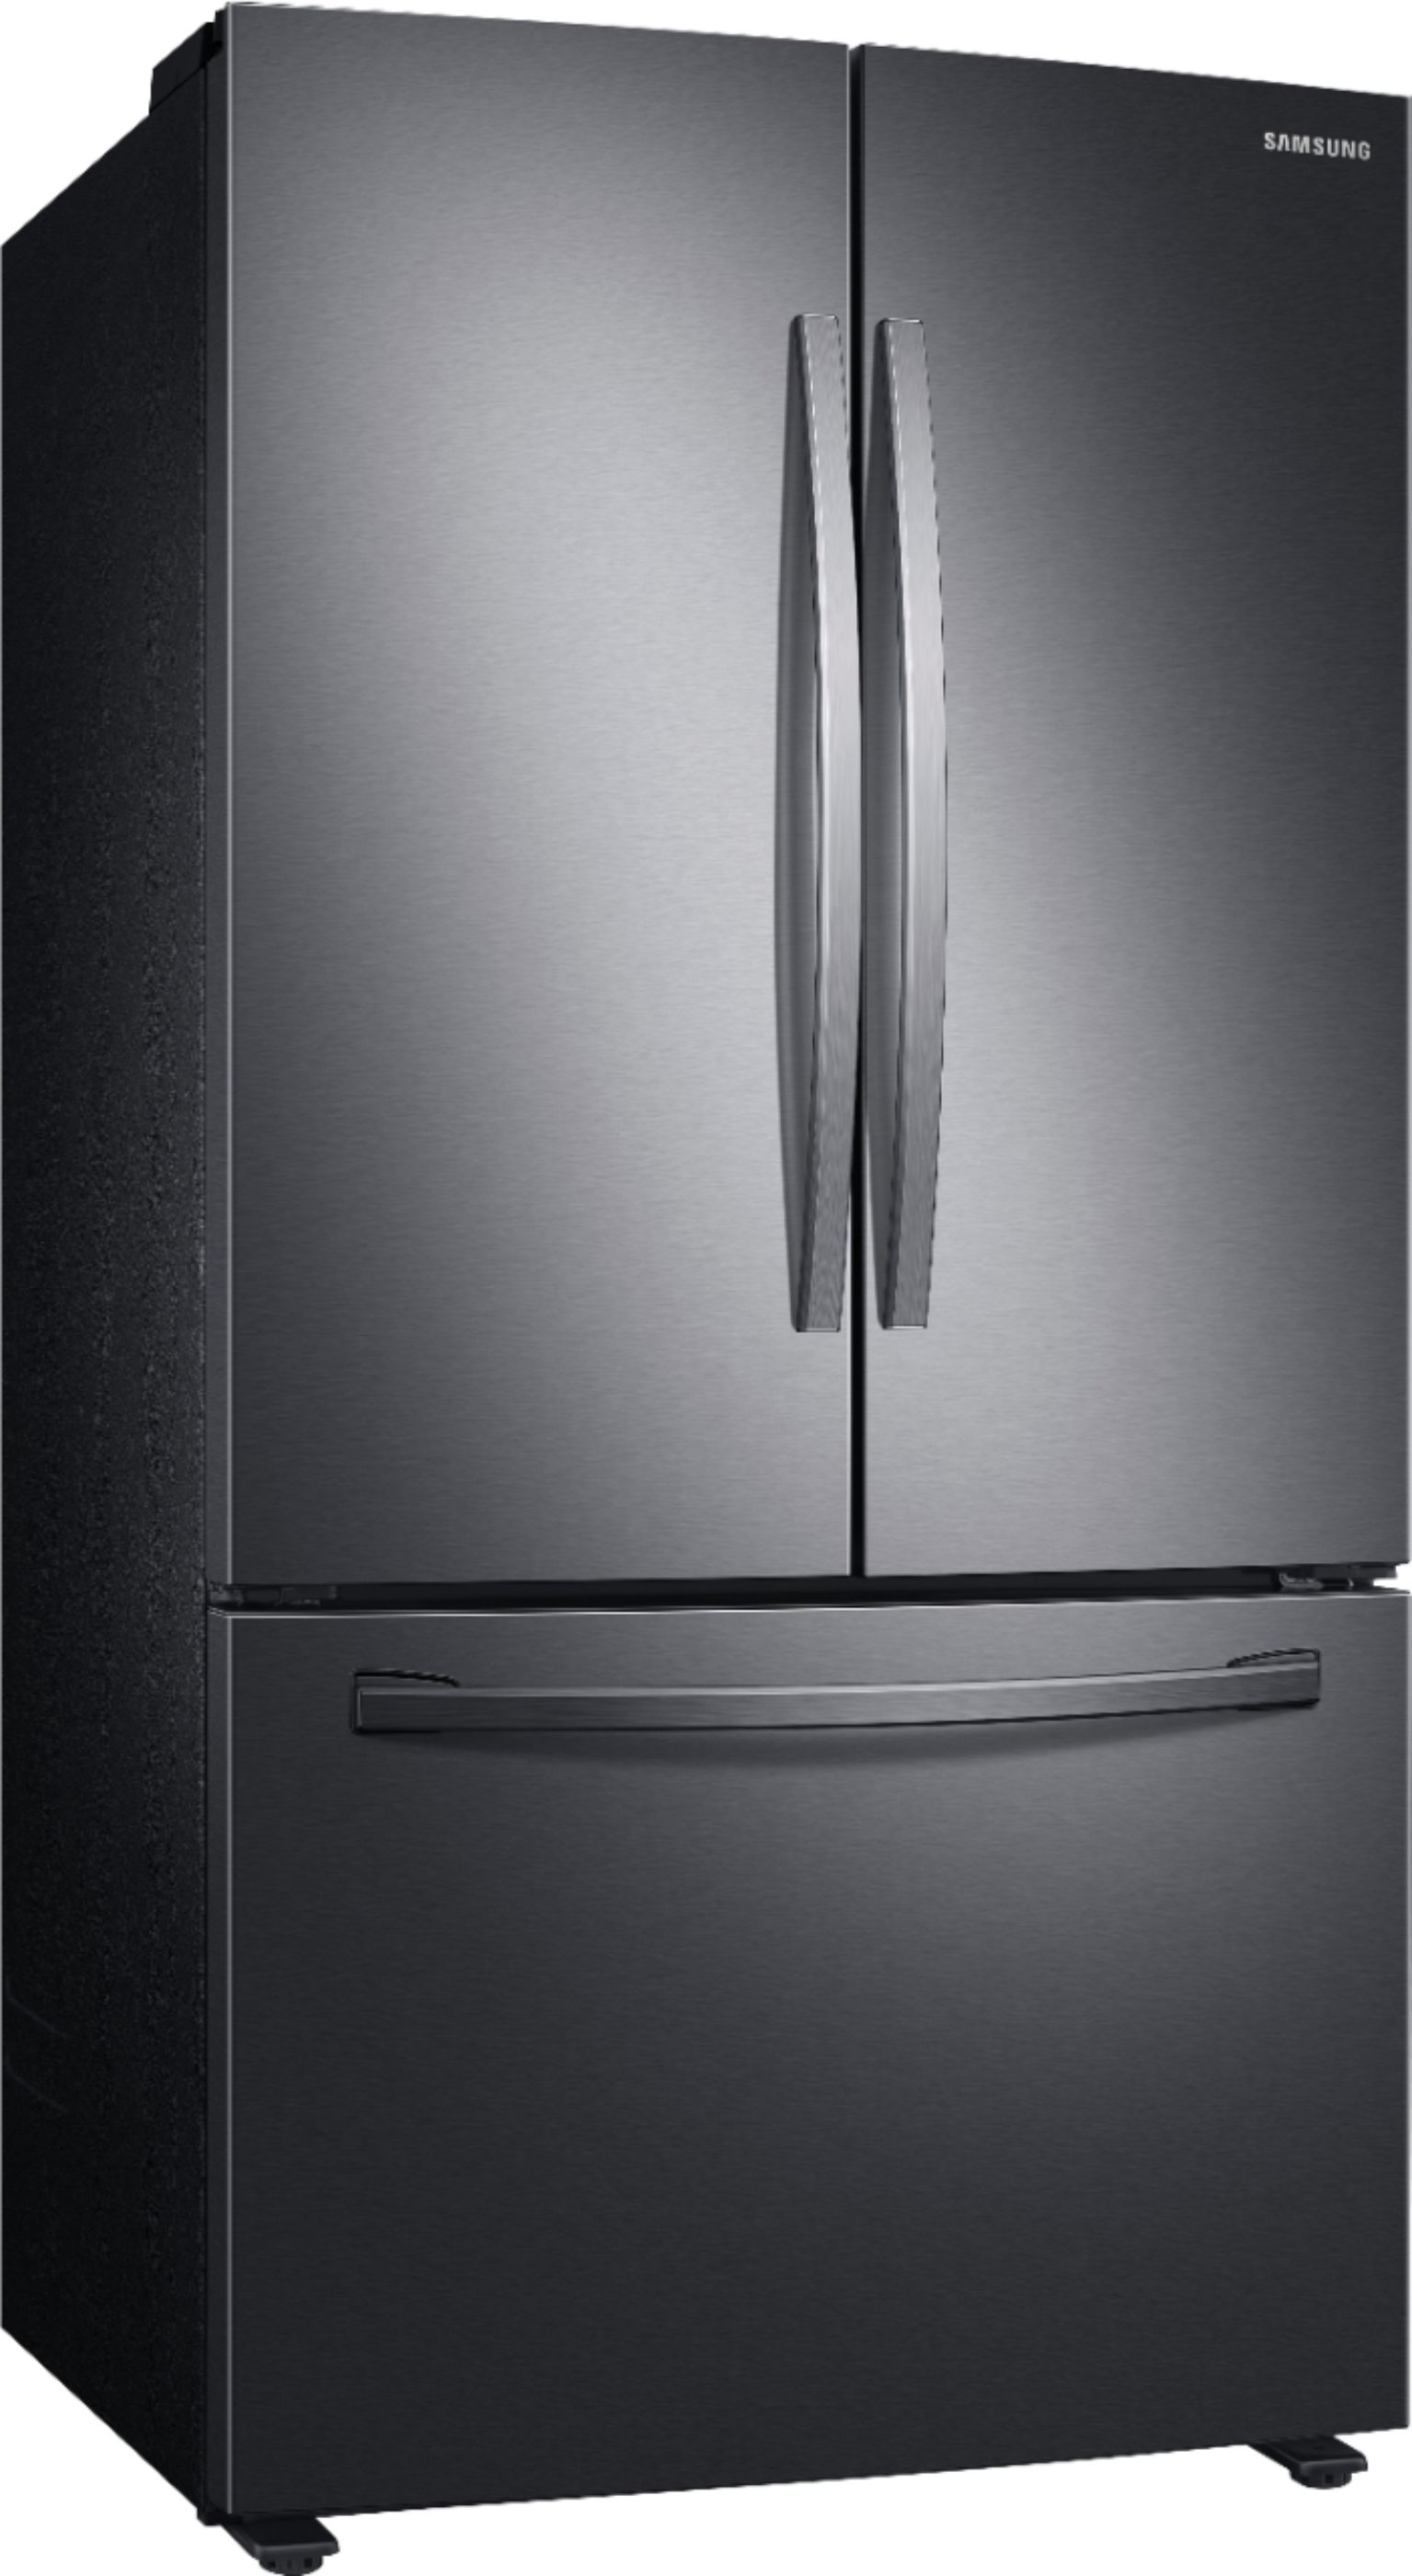 Detail Images Of Refrigerator Nomer 29